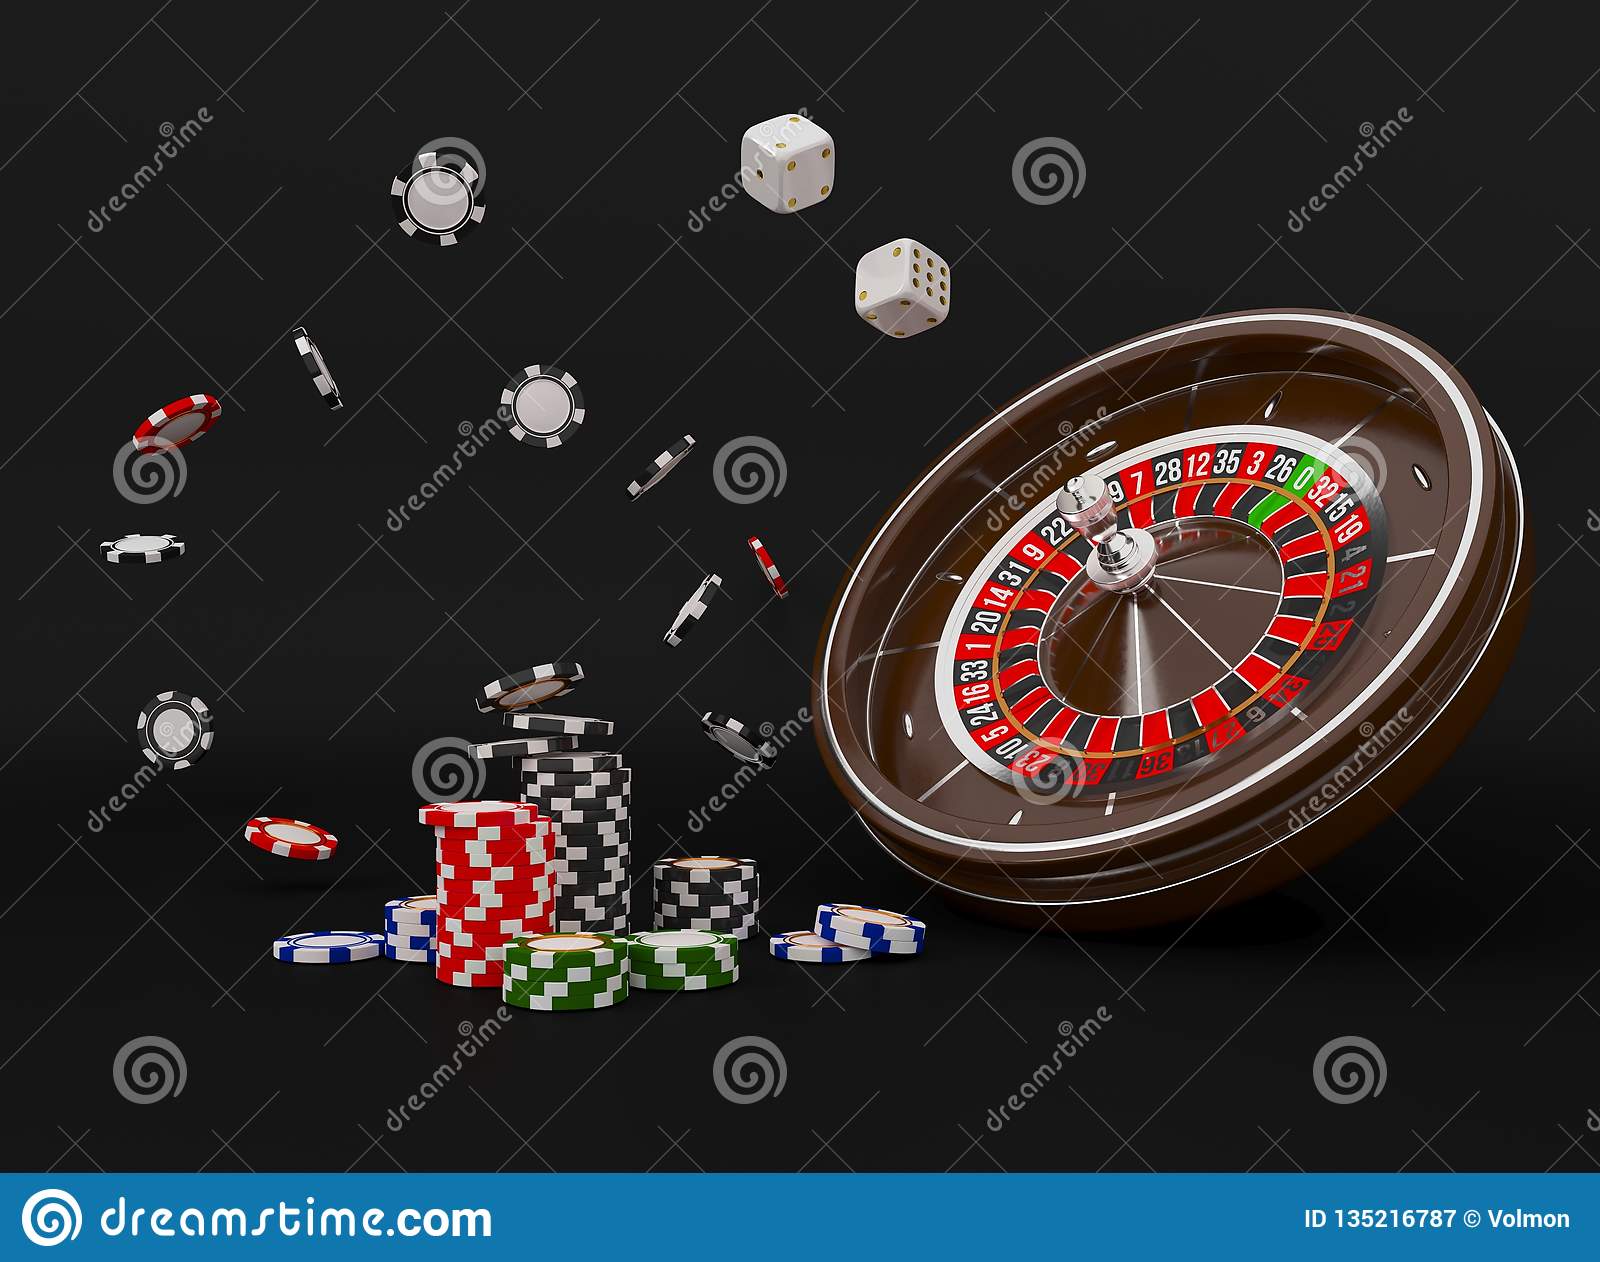 Mountaineer Bitcoin casino racetrack entries（マウンテニア・ビットコイン・カジノ・レーストラック・エントリー